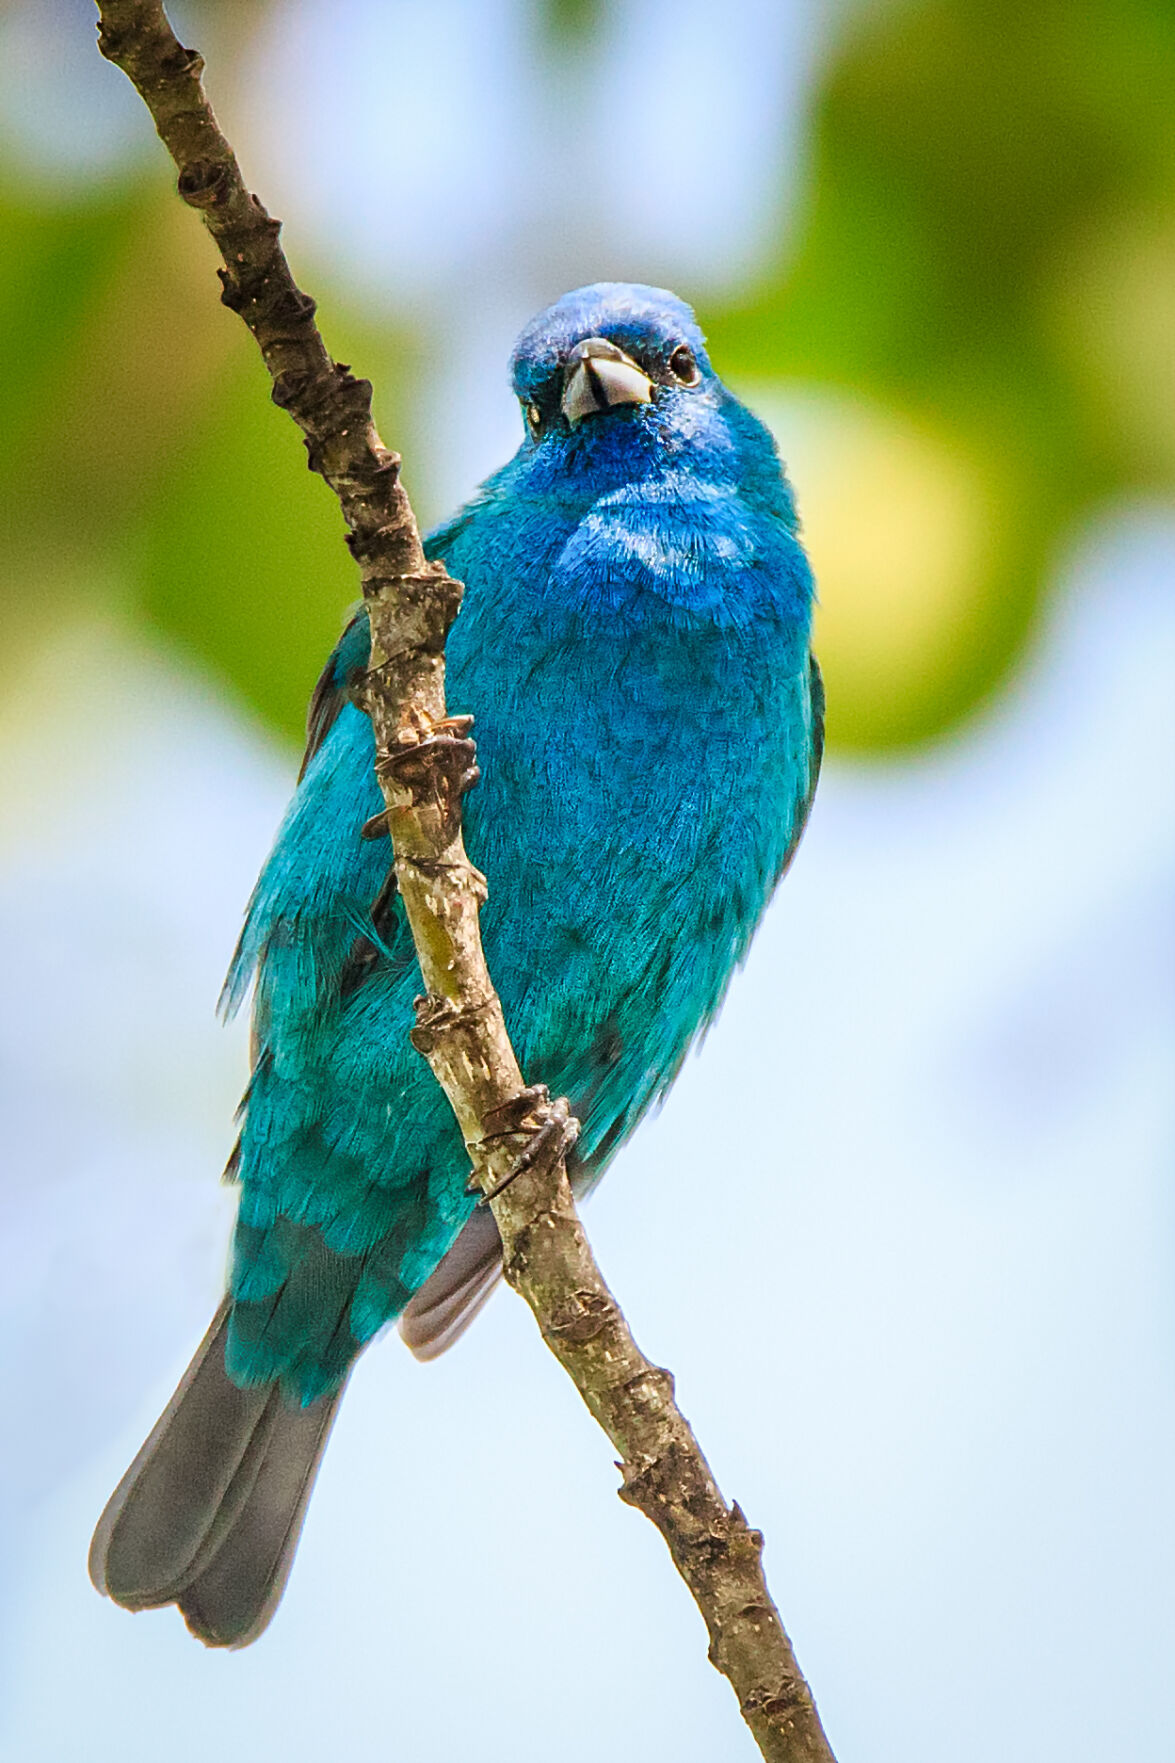 Backyard Feeder Birds - The Blue Jay: Big, Bold, Brash and Blue